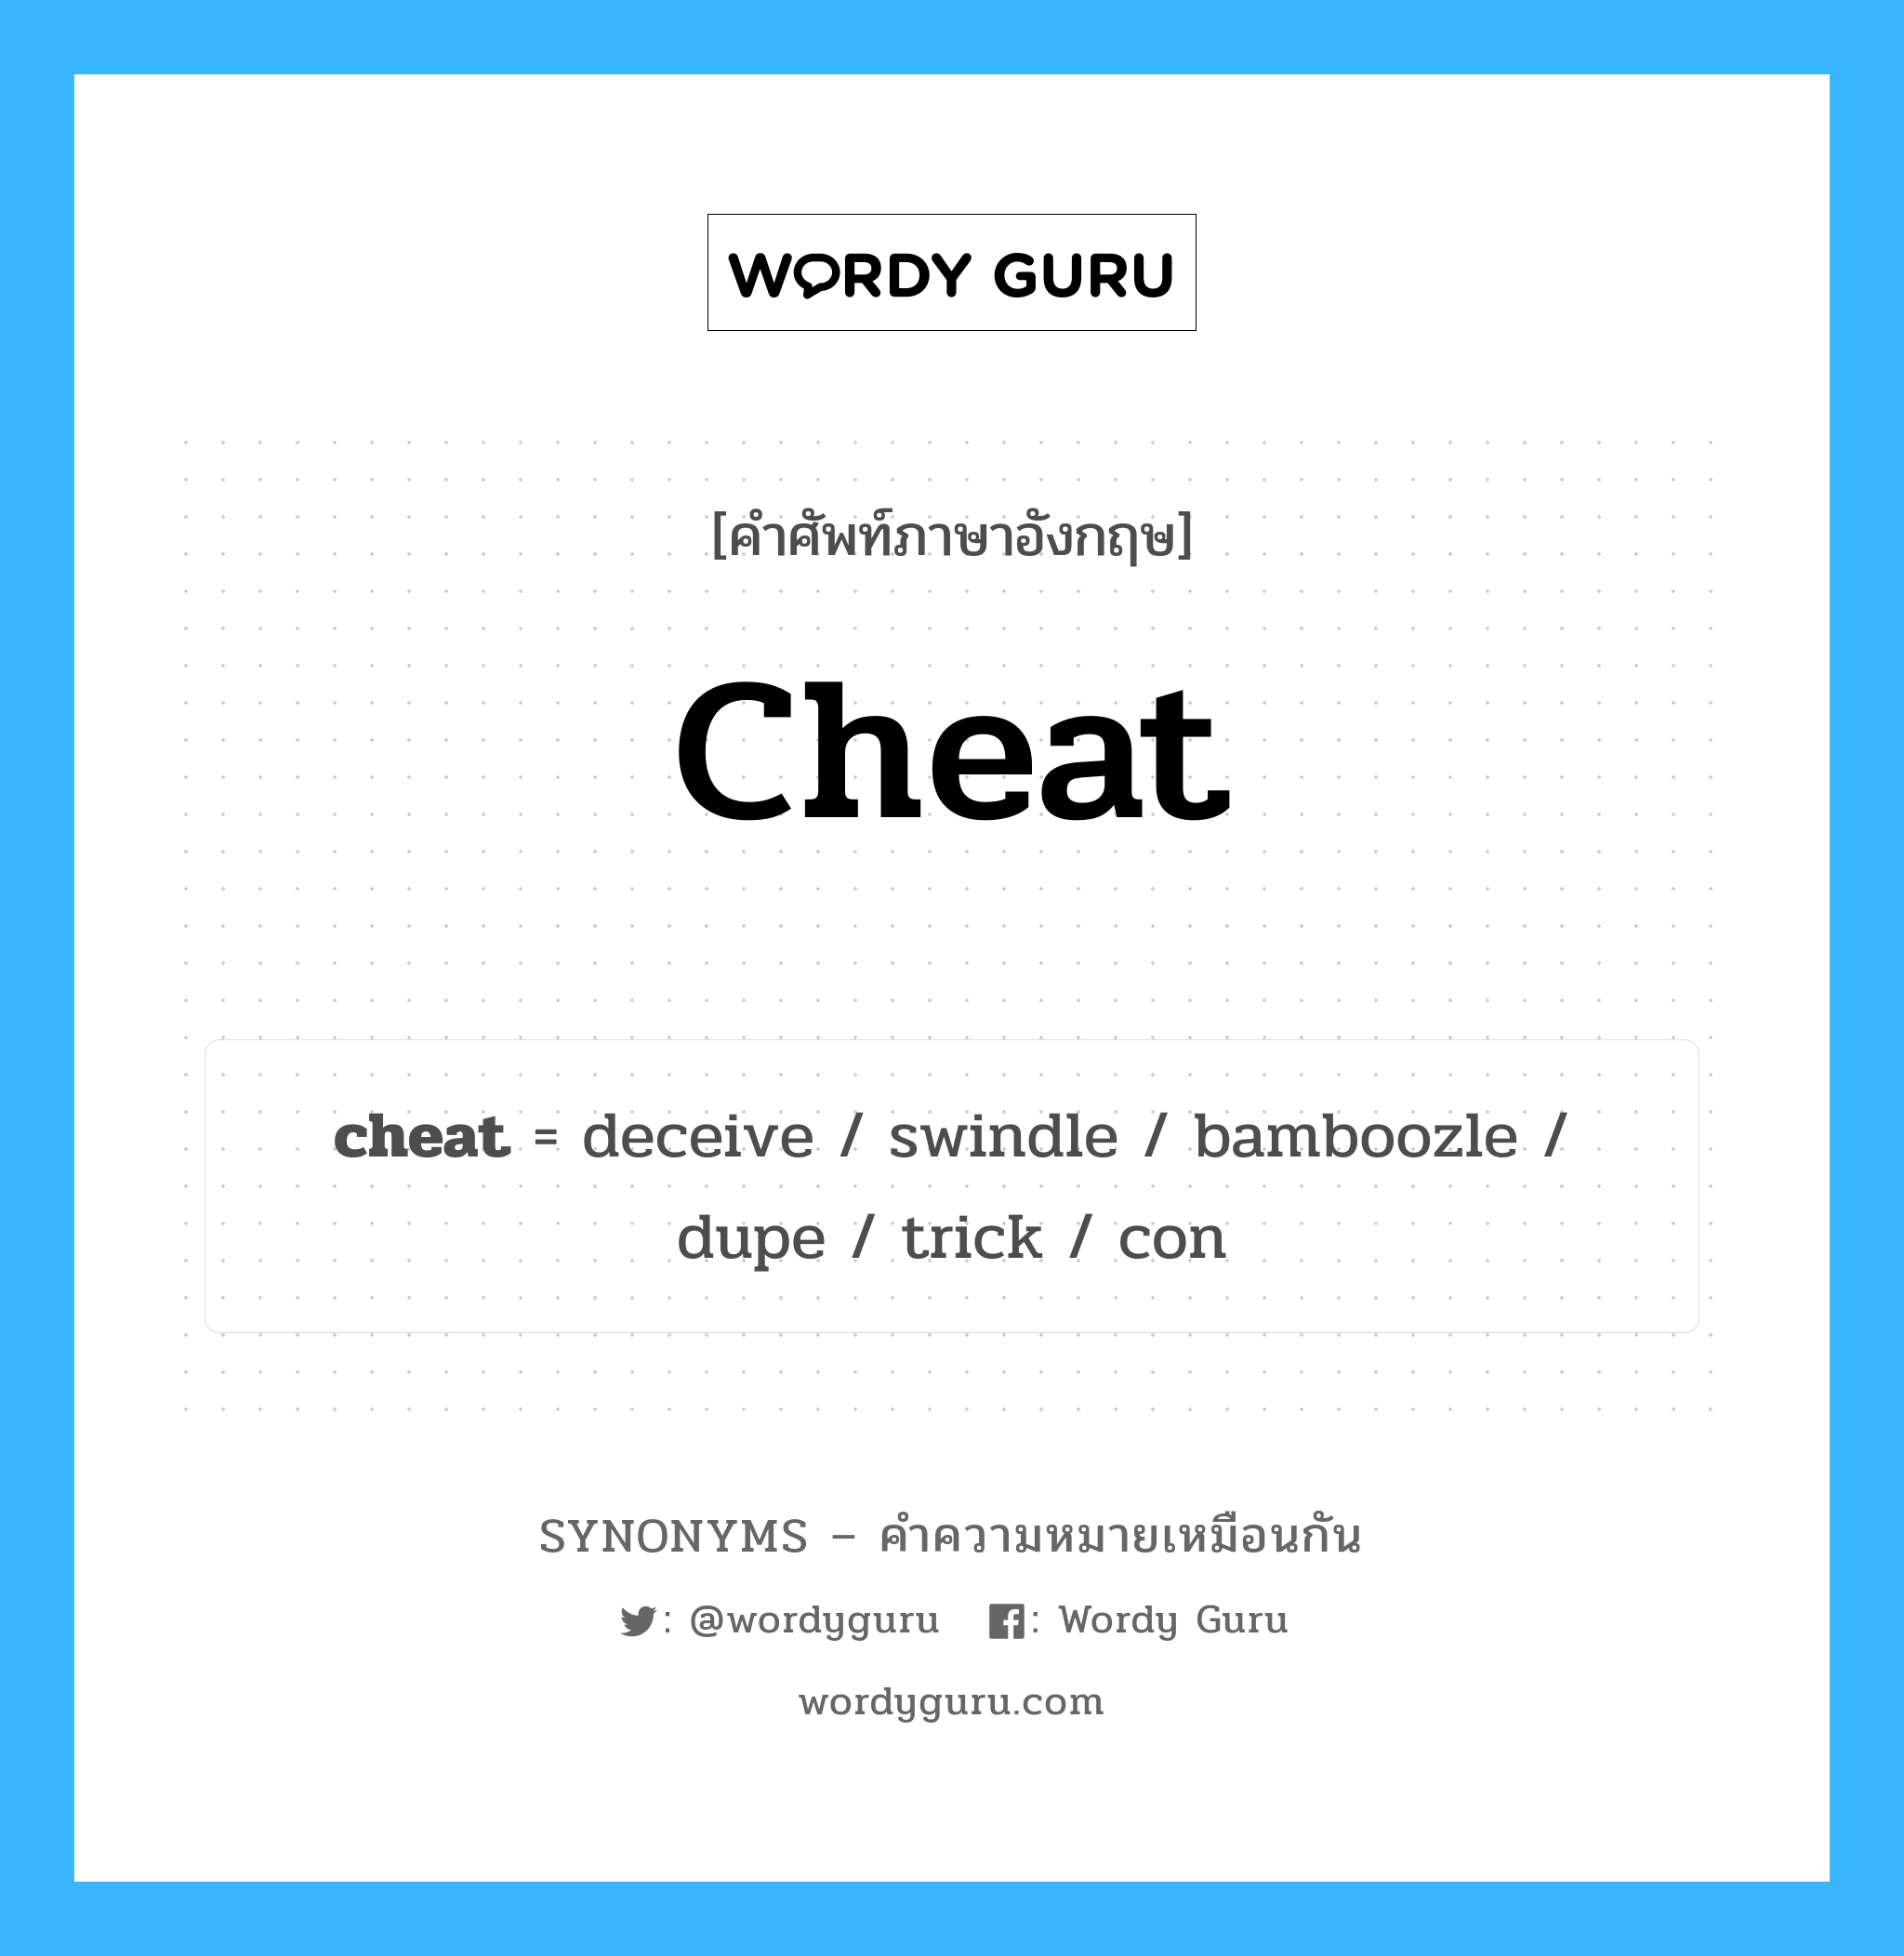 swindle เป็นหนึ่งใน cheat และมีคำอื่น ๆ อีกดังนี้, คำศัพท์ภาษาอังกฤษ swindle ความหมายคล้ายกันกับ cheat แปลว่า โกง หมวด cheat